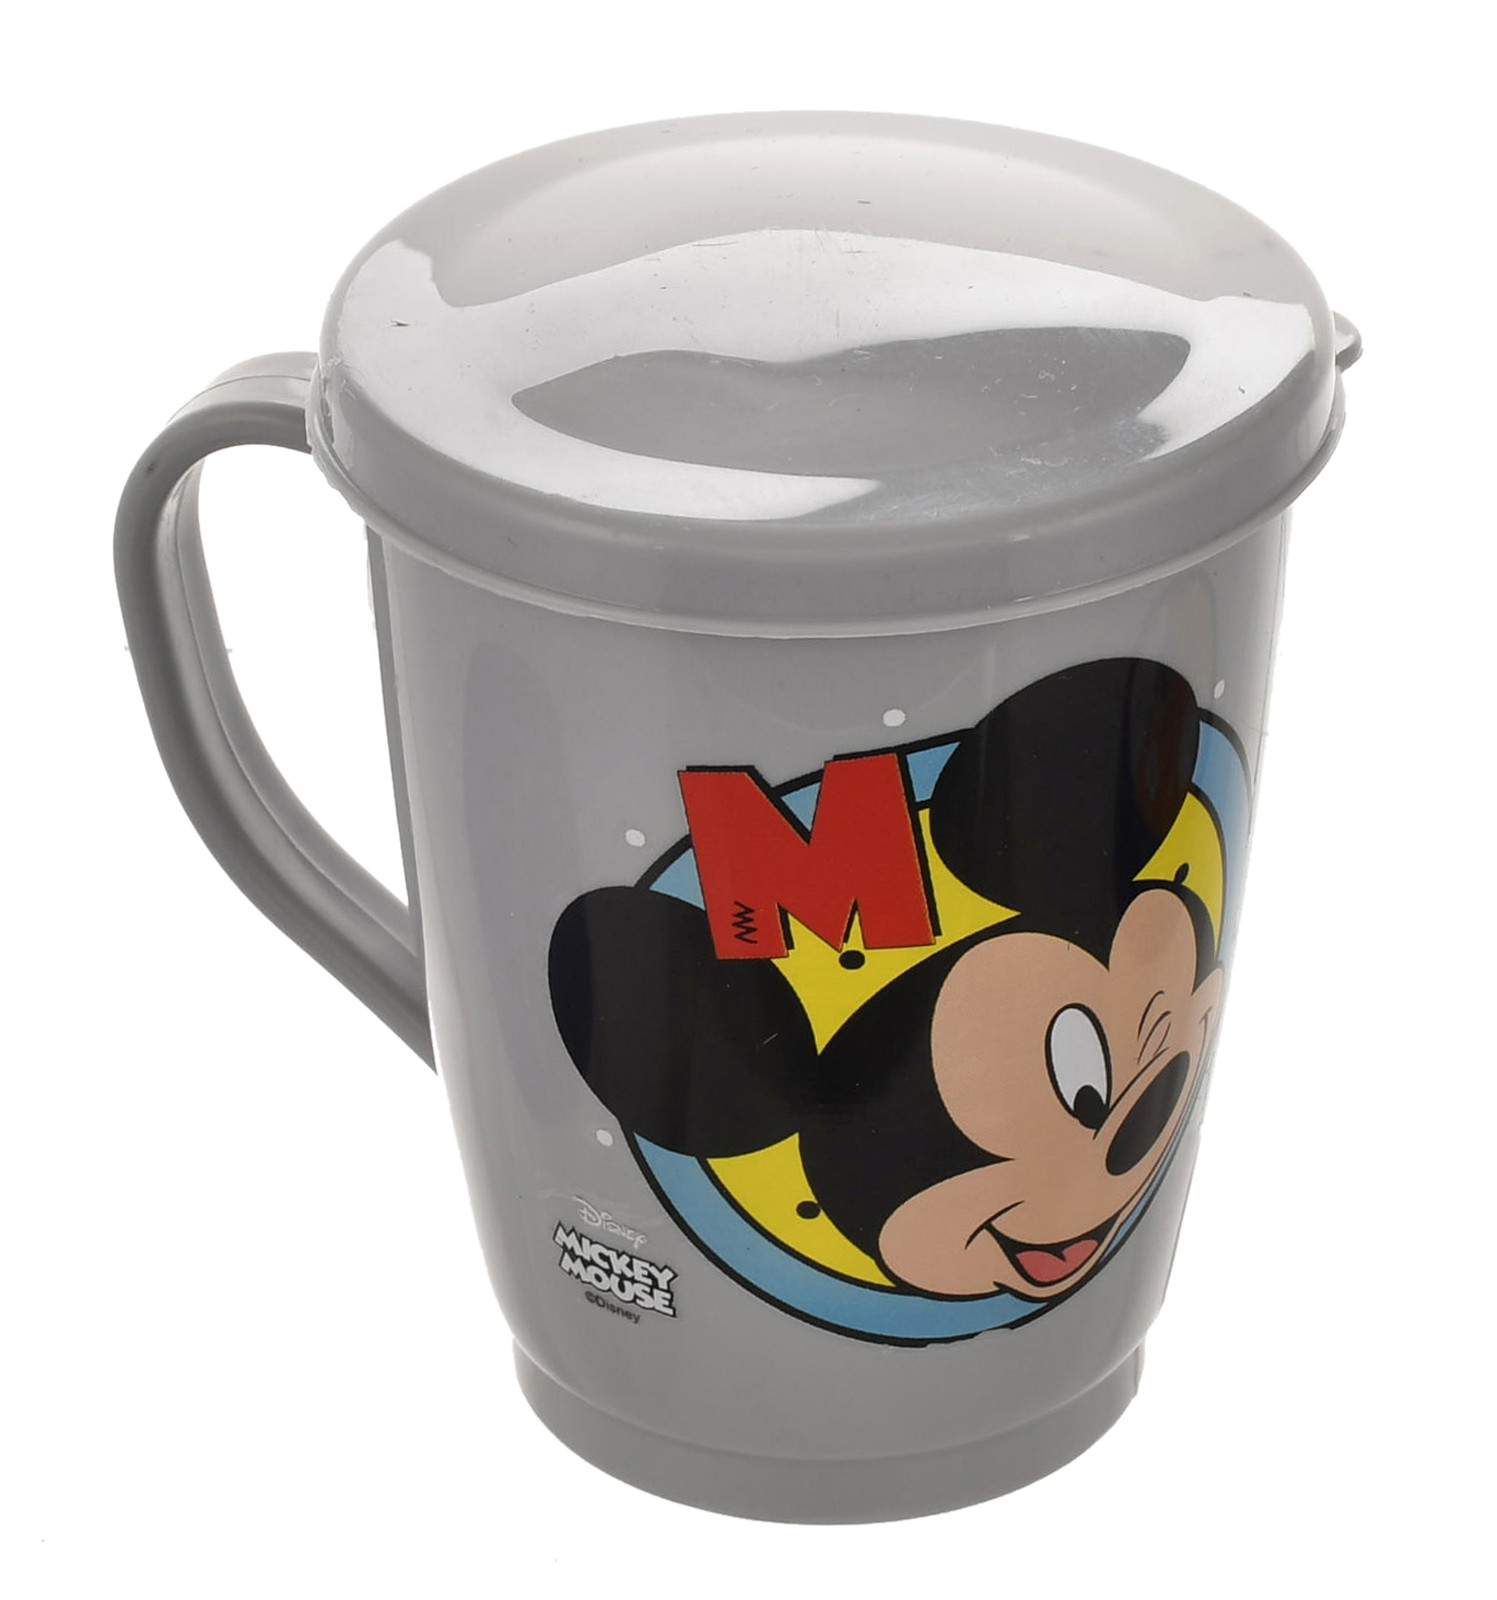 Kuber Industries Disney Printed Food Grade BPA Free Tea/Coffee Mug for Coffee Tea Cocoa, Camping Mugs with Lid, Pack of 2 (Light Grey & Red)